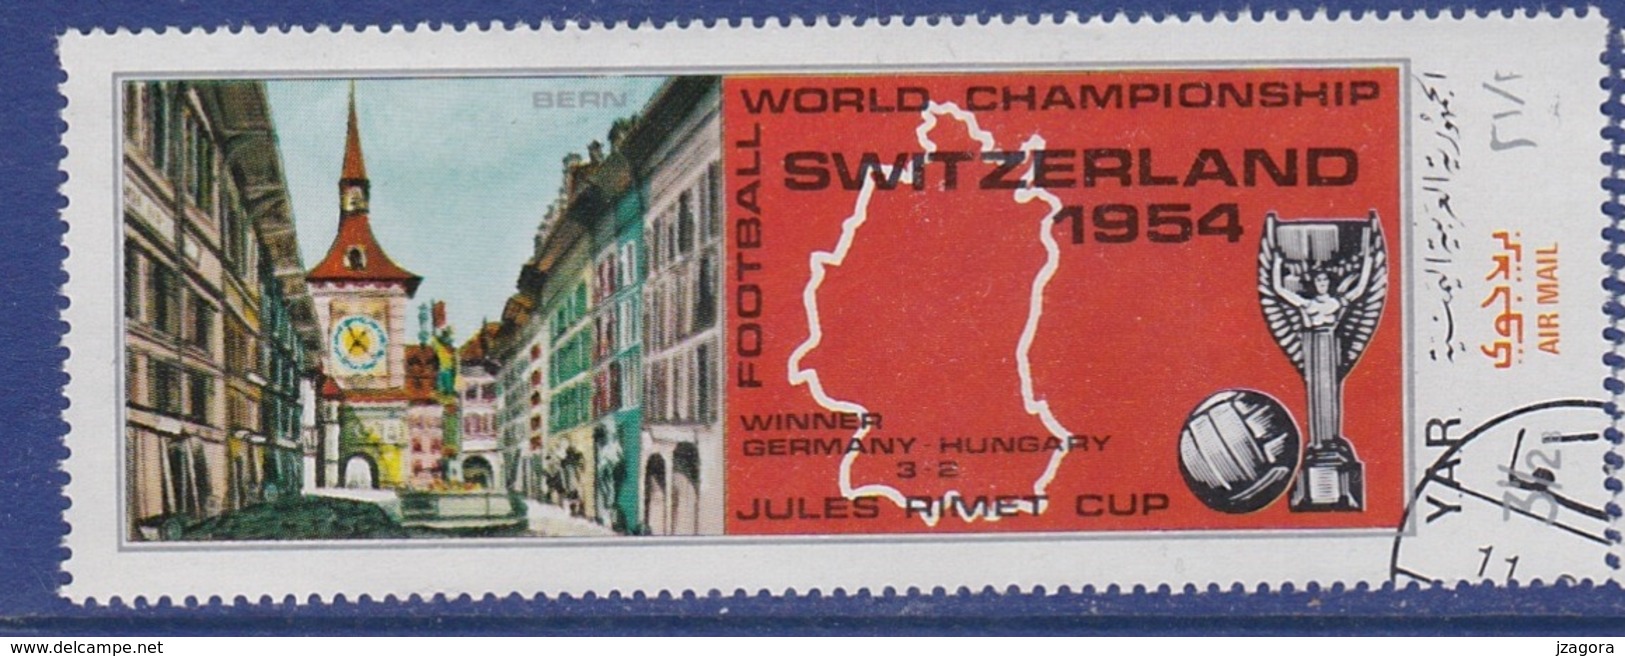 SOCCER FOOTBALL WORLD CHAMPIONSHIP MUNDIAL SWITZERLAND 1954 - YAR YEMEN - 1954 – Suiza